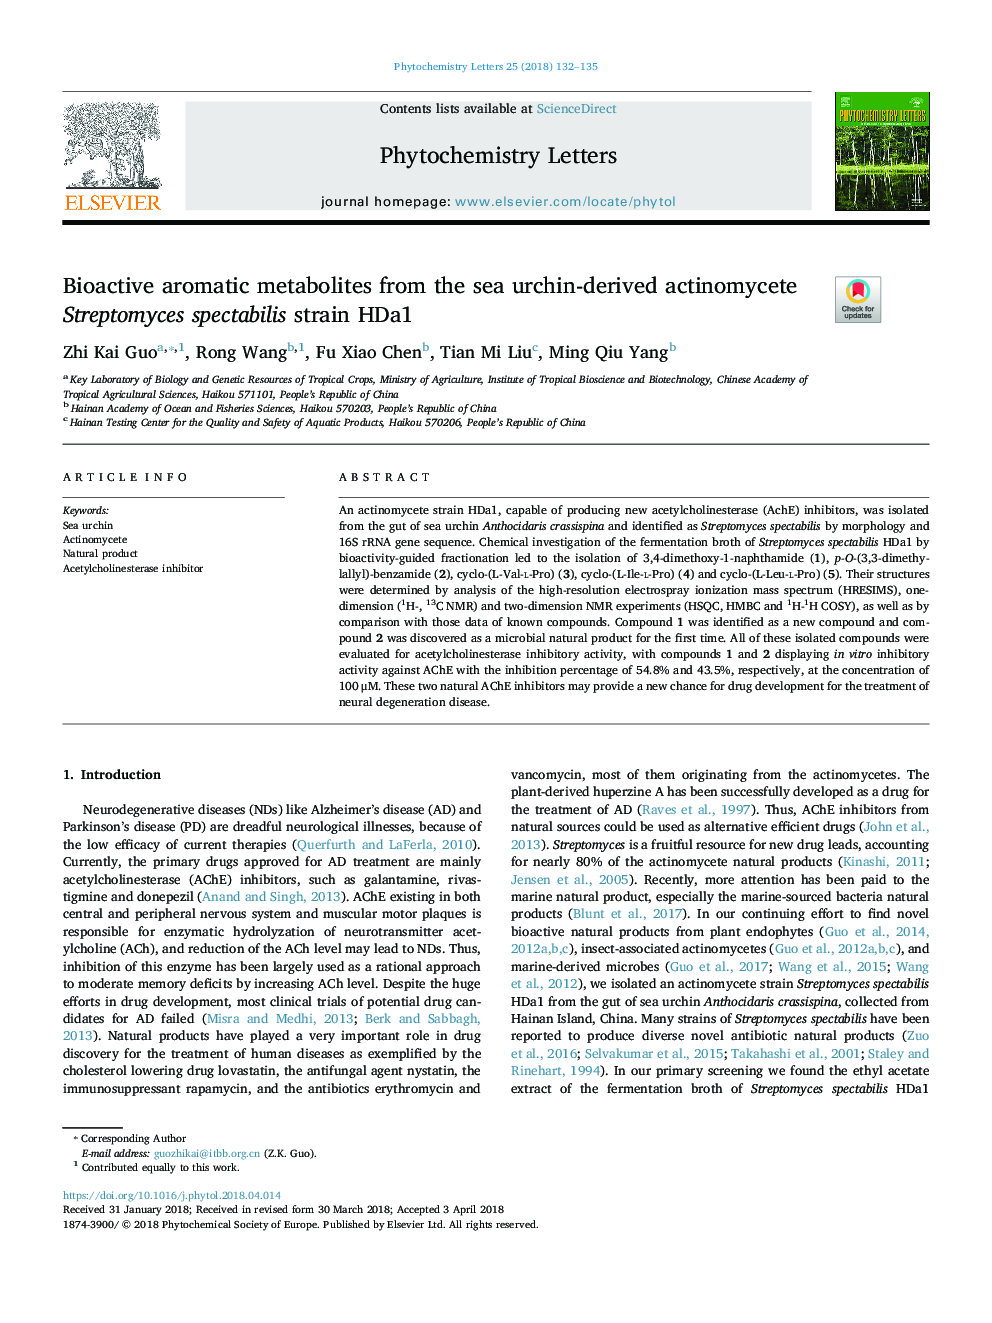 Bioactive aromatic metabolites from the sea urchin-derived actinomycete Streptomyces spectabilis strain HDa1